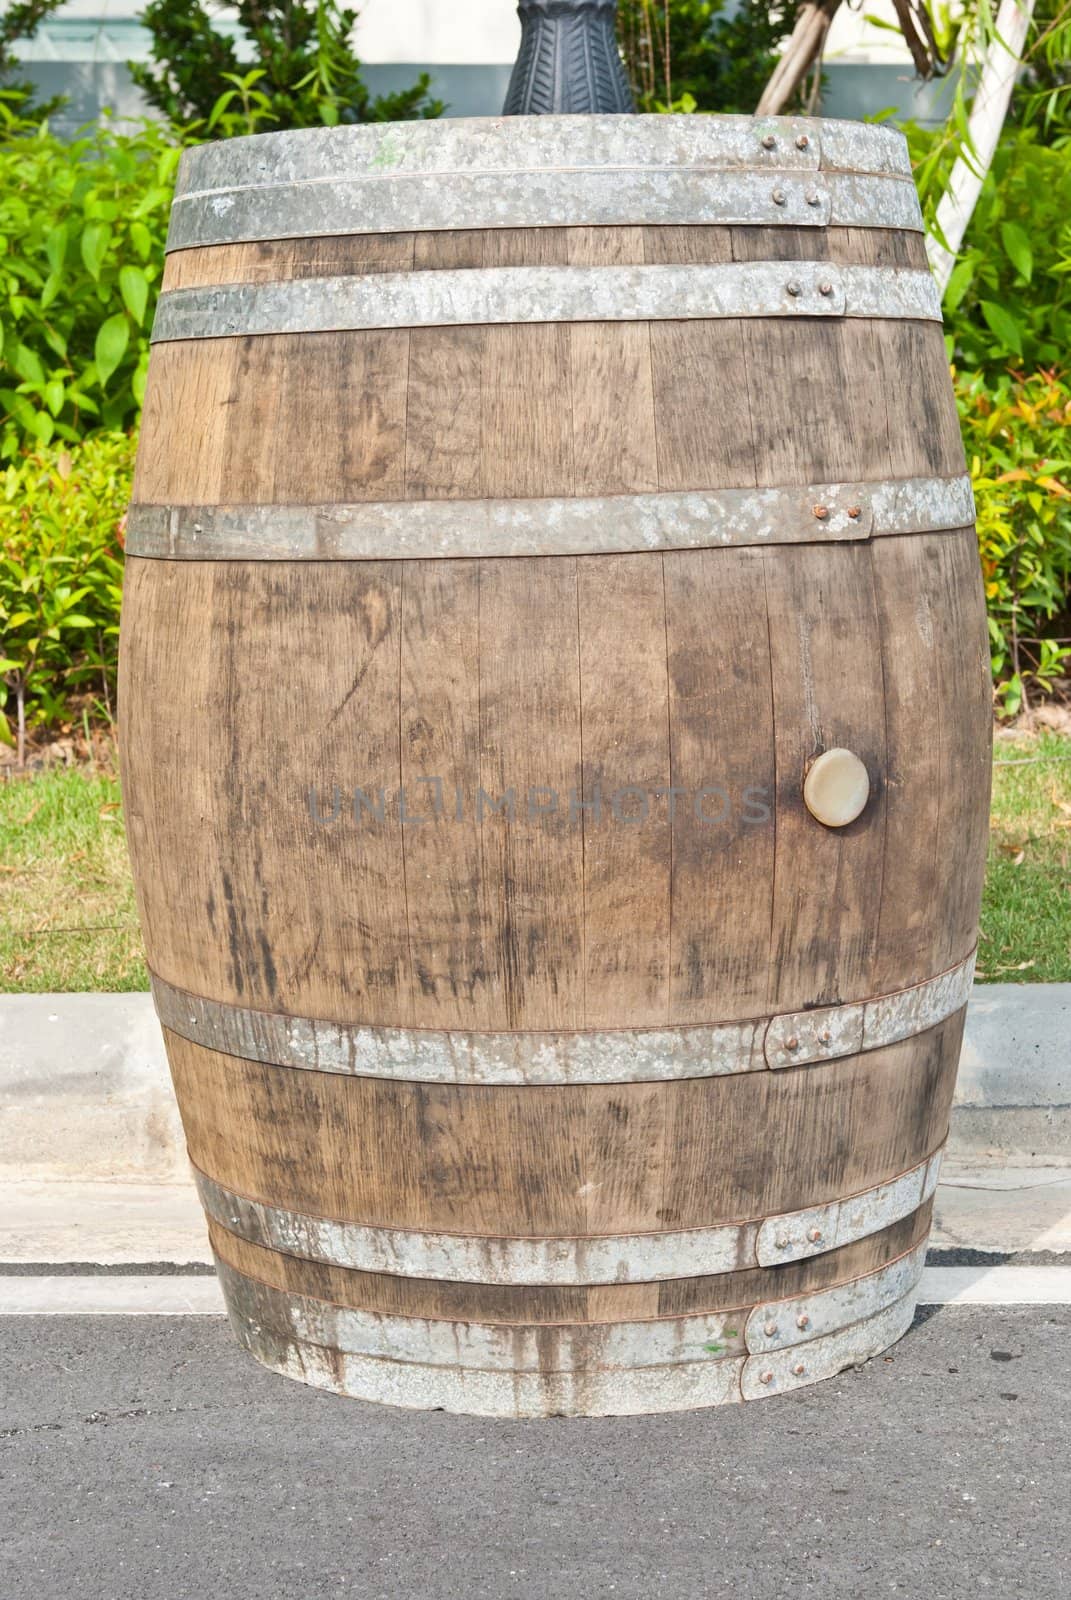 Big old wine barrel by sasilsolutions